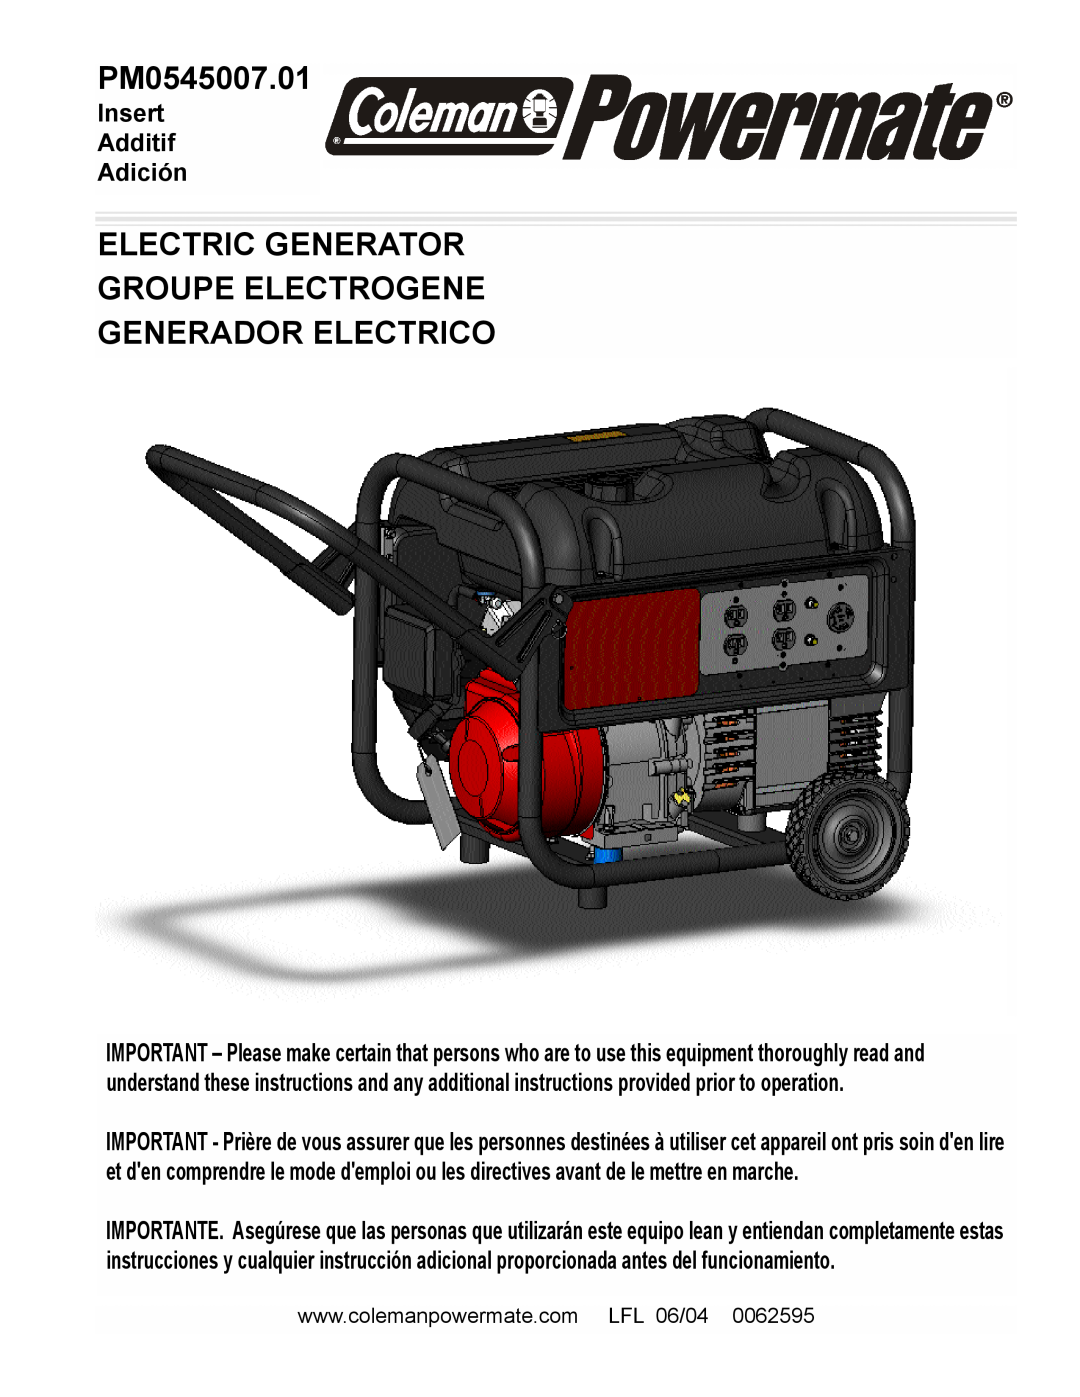 Powermate PM0545007.01 manual Electric Generator Groupe Electrogene, Generador Electrico, Insert Additif Adición 